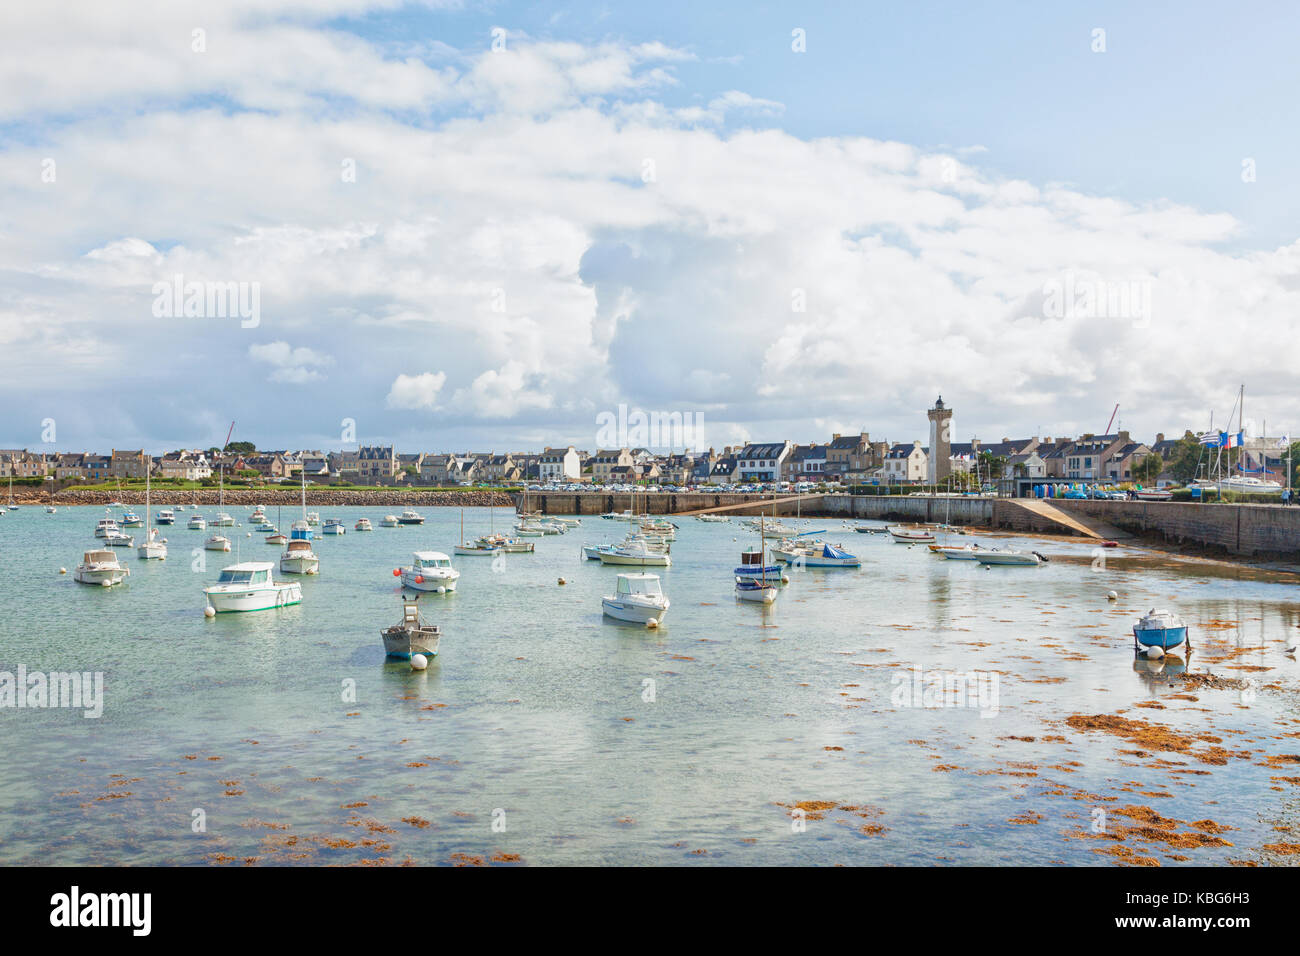 Village and marina of Roscoff, Brittany, France Stock Photo